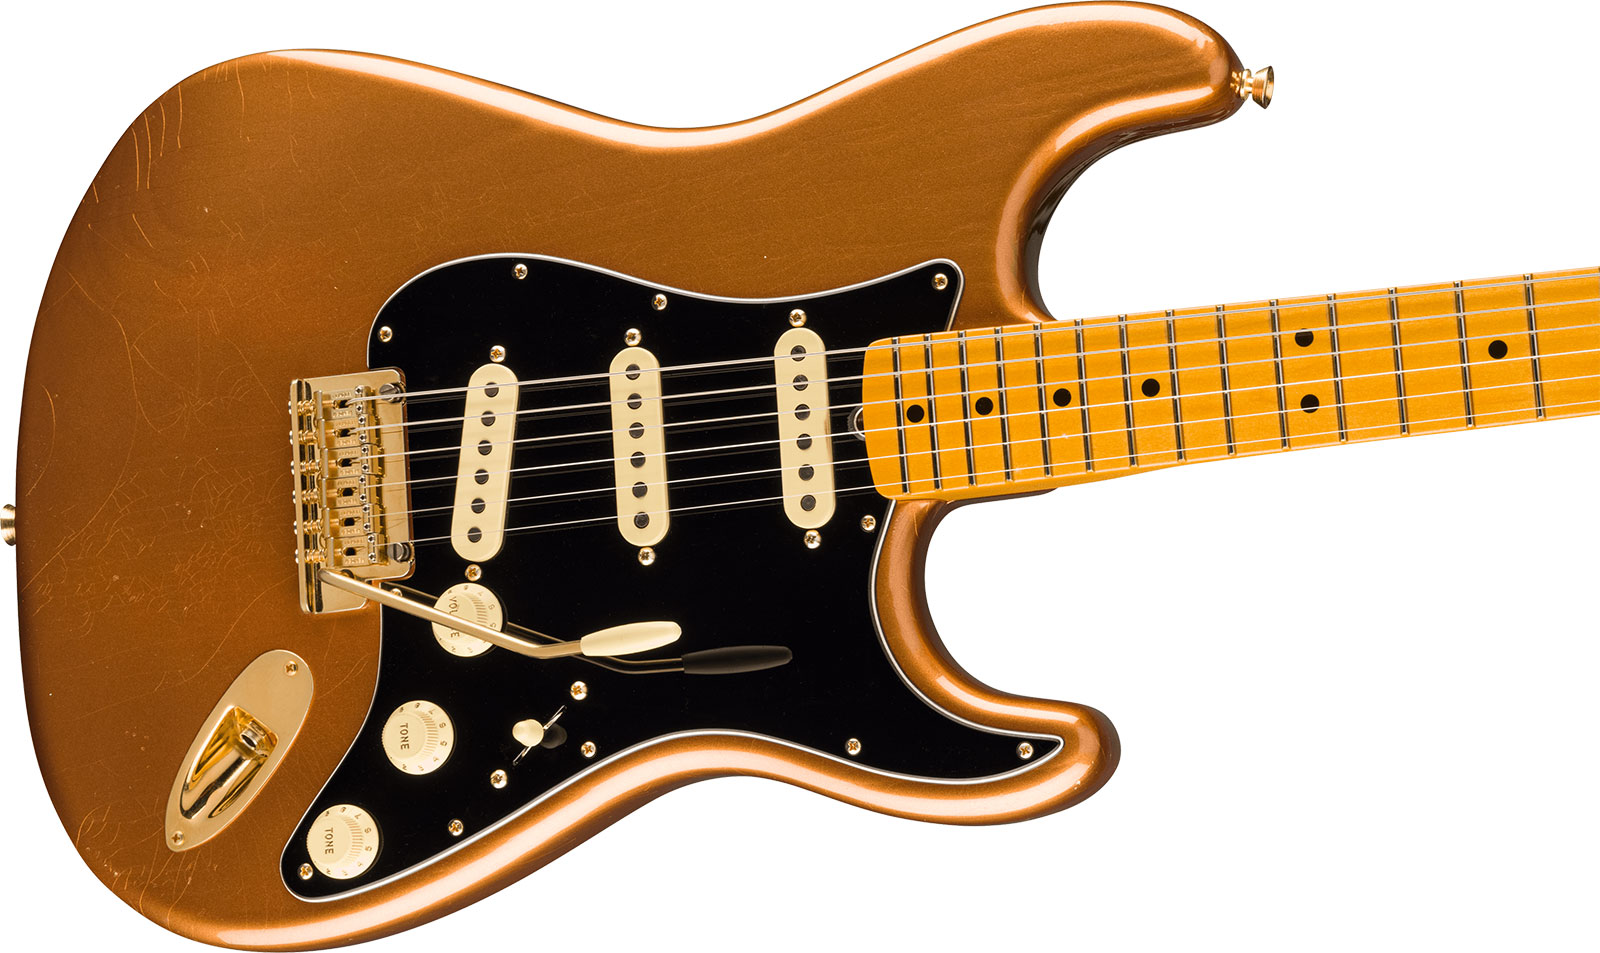 Fender Bruno Mars Strat Usa Signature 3s Trem Mn - Mars Mocha - Signature electric guitar - Variation 2